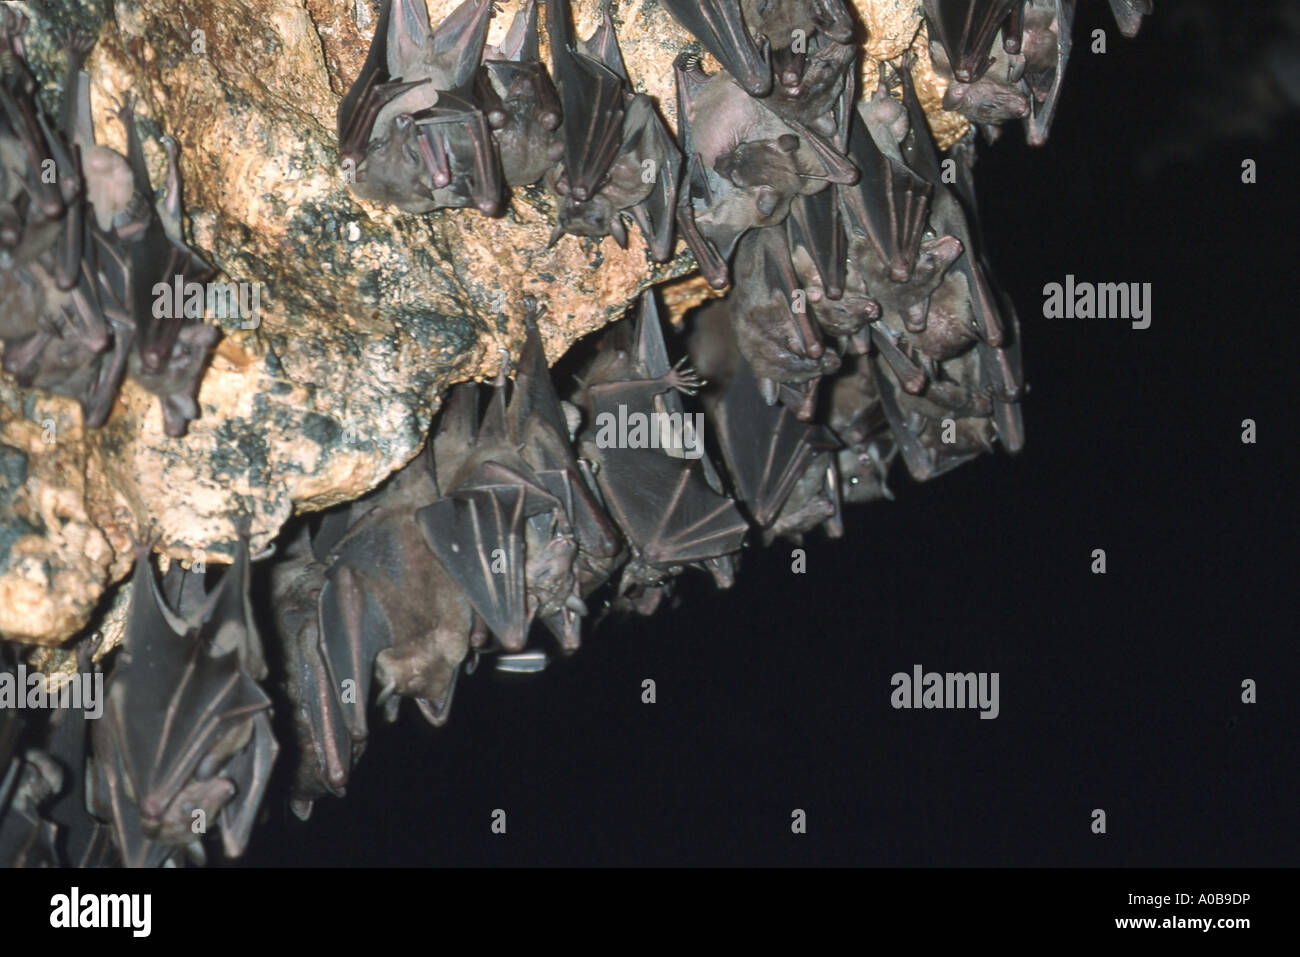 Old World fruit bats (Pteropodidae), hanging at sleeping place, Indonesia Stock Photo